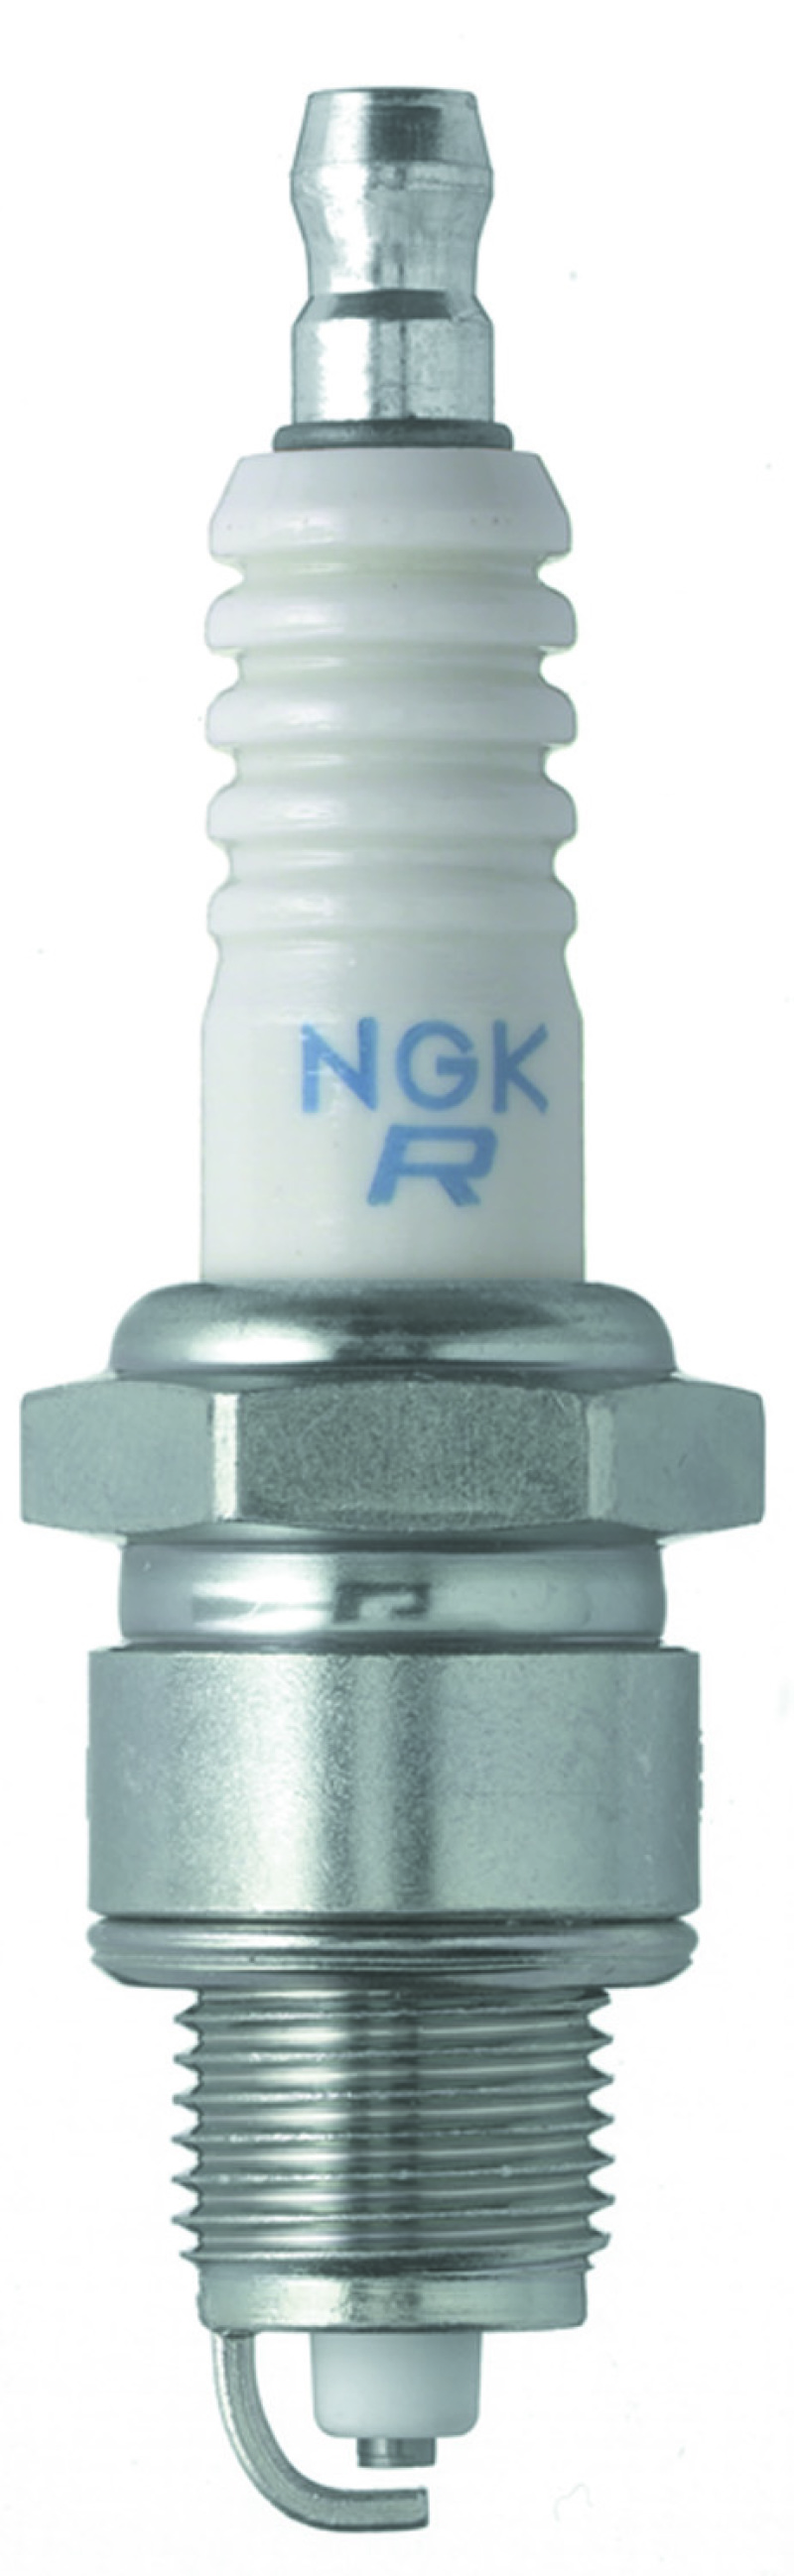 NGK Standard Spark Plug Box of 10 (BPR7HS-10) - 1092